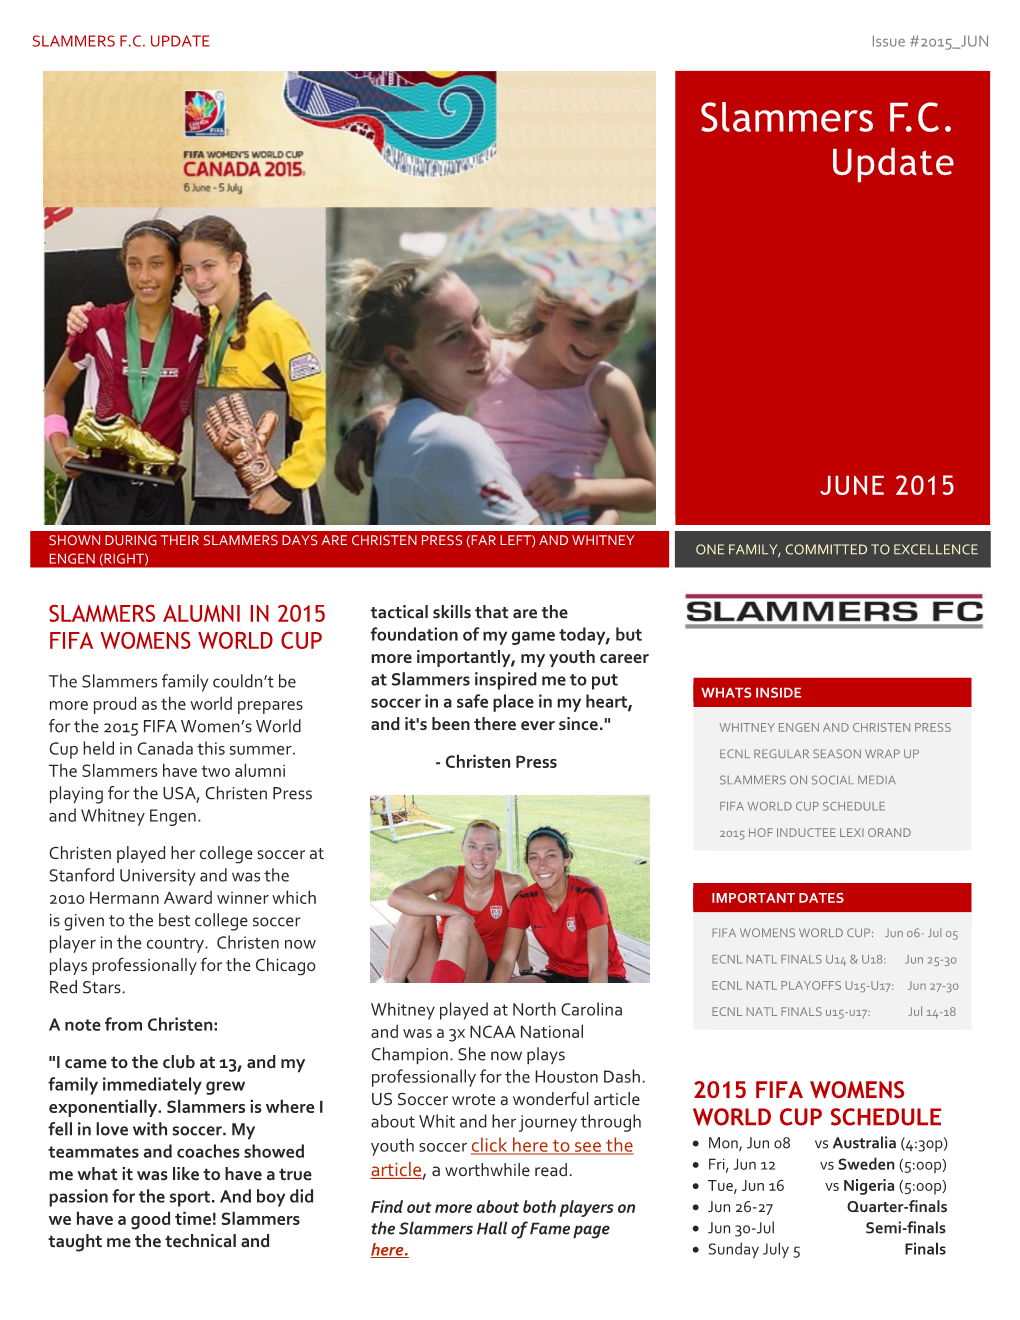 SLAMMERS F.C. UPDATE Issue #2015 JUN